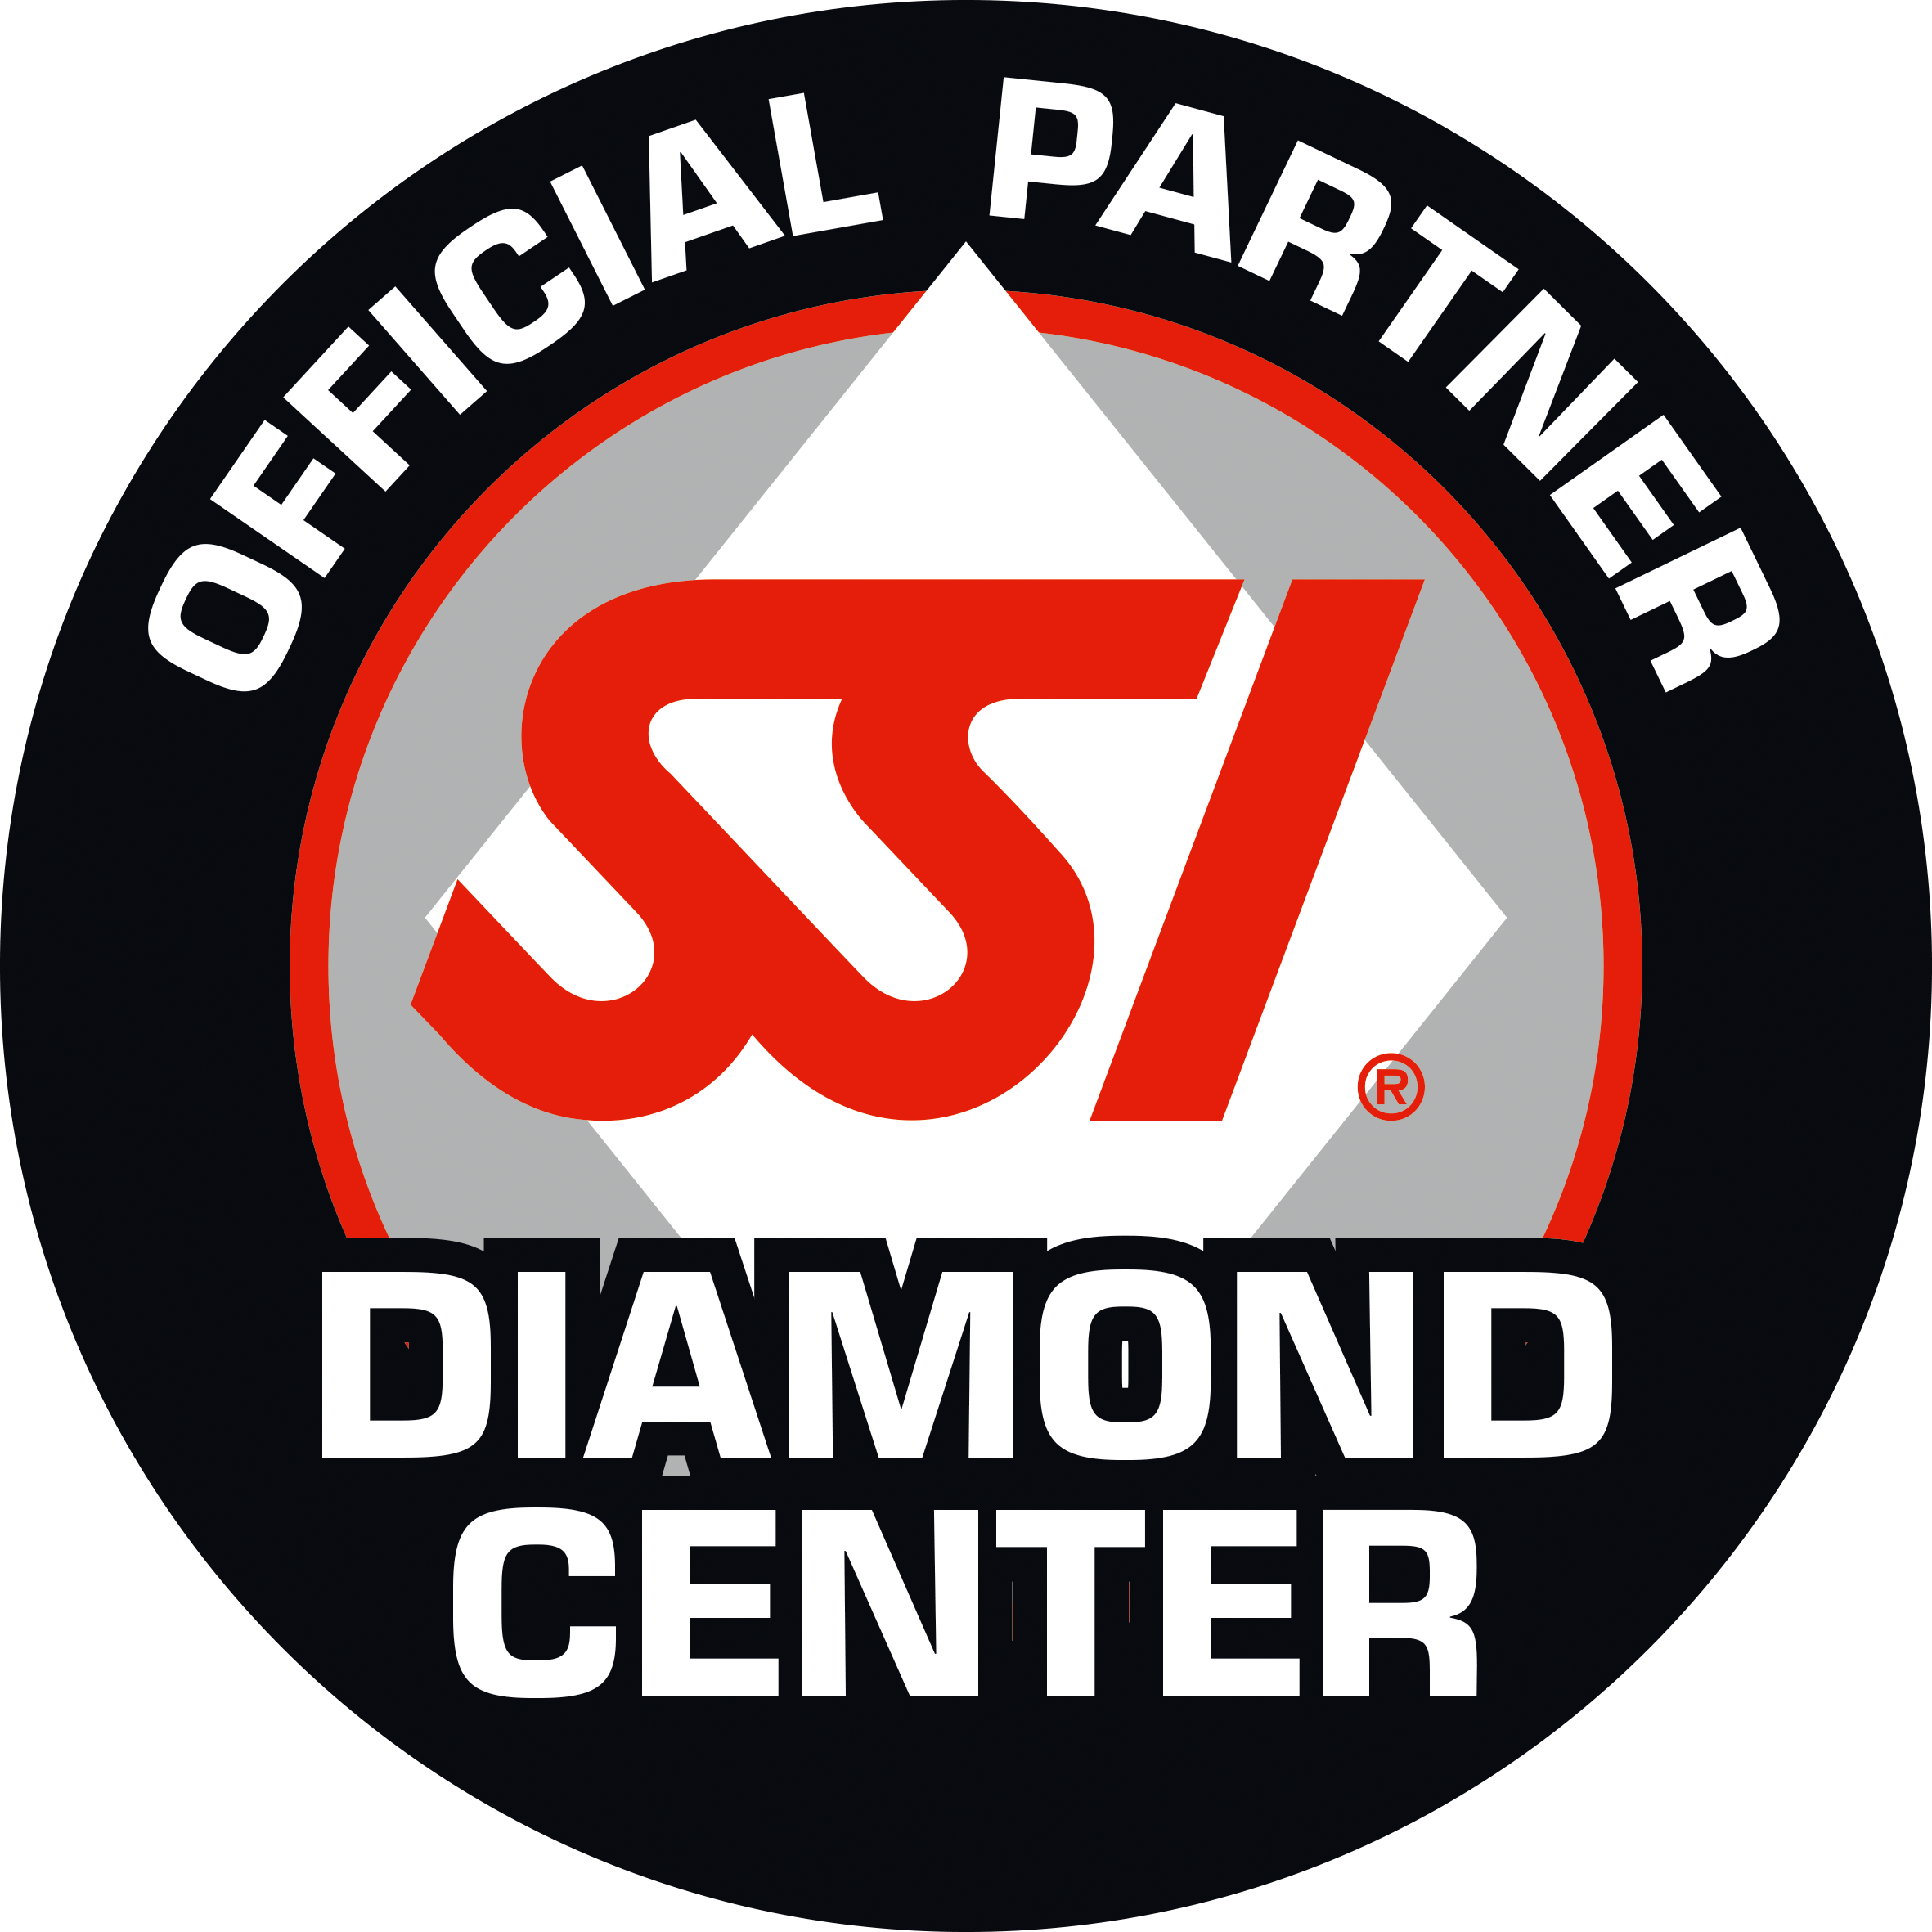 SSI Diamond Center Curacao